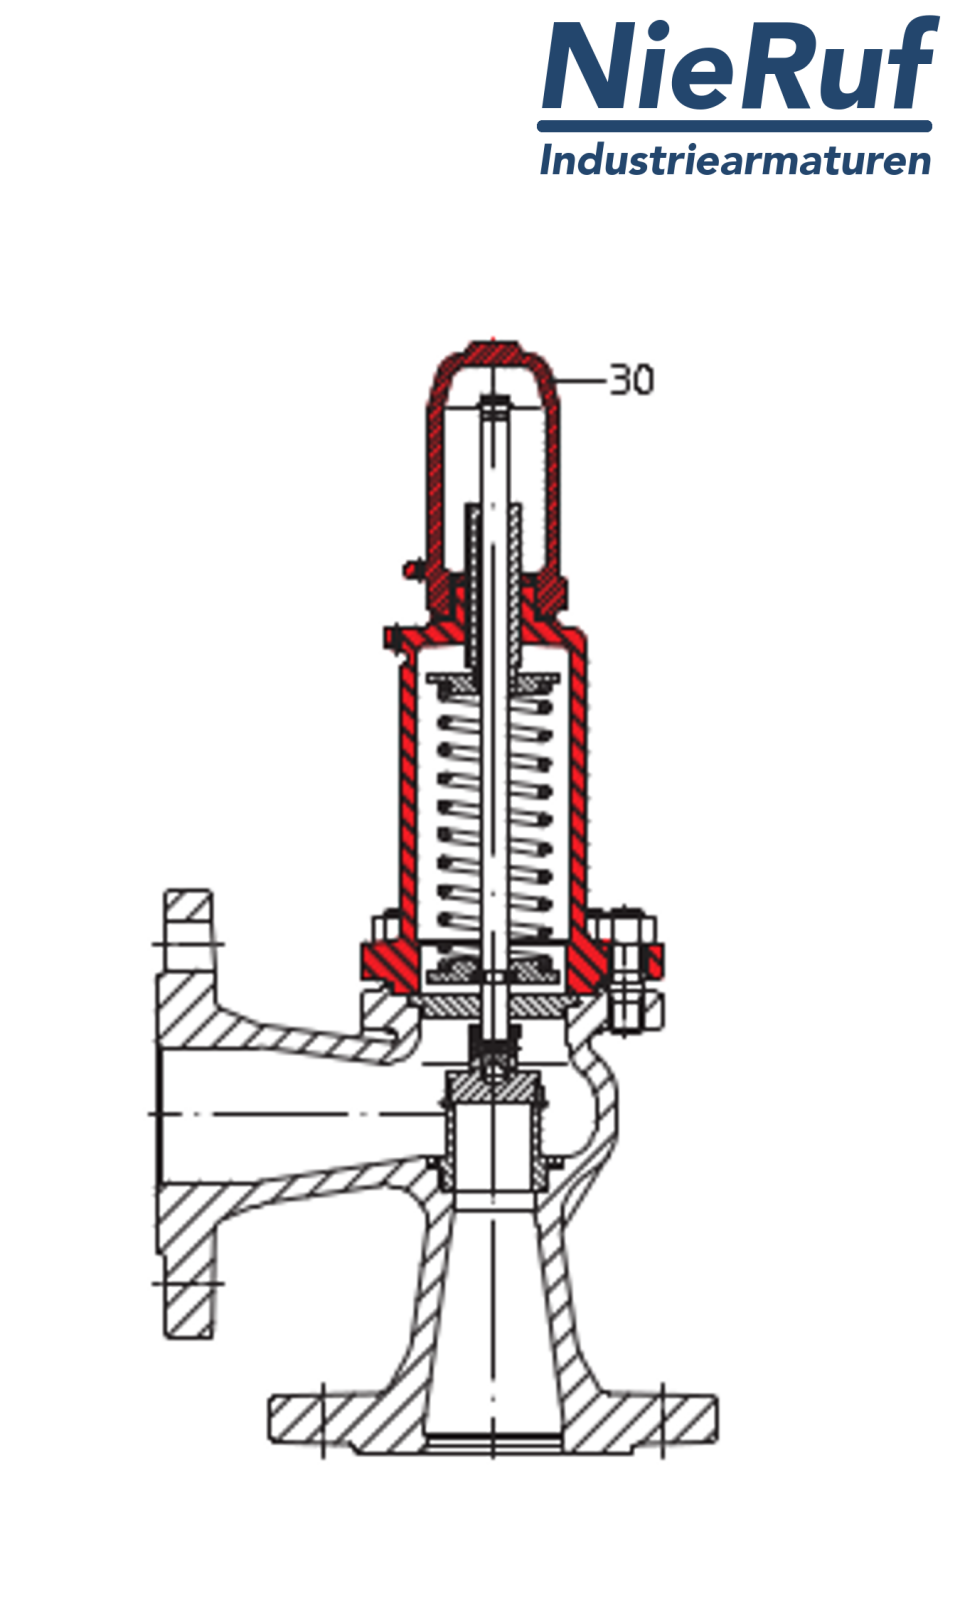 flange-safety valve DN40/DN40 SF0101, cast iron EN-JL1040 metal, without lever